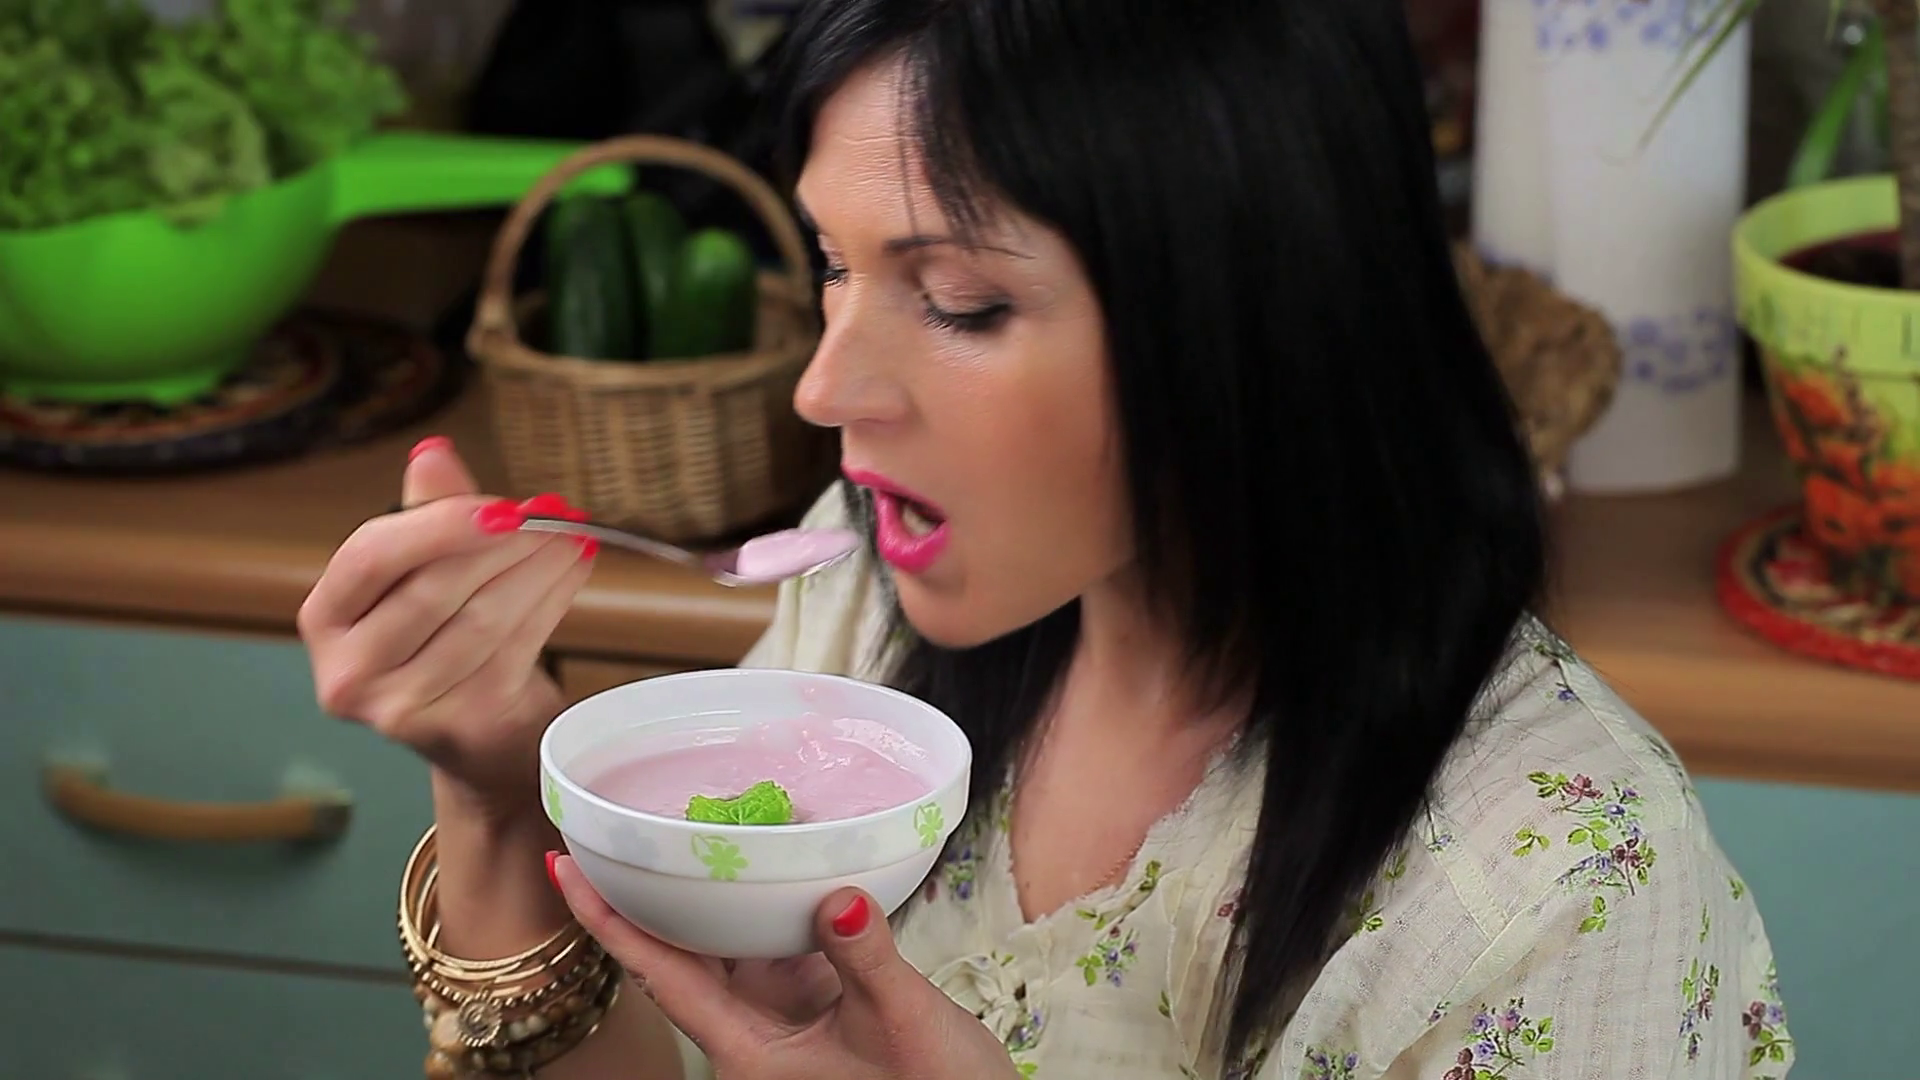 Woman eating yoghurt Stock Video Footage - VideoBlocks